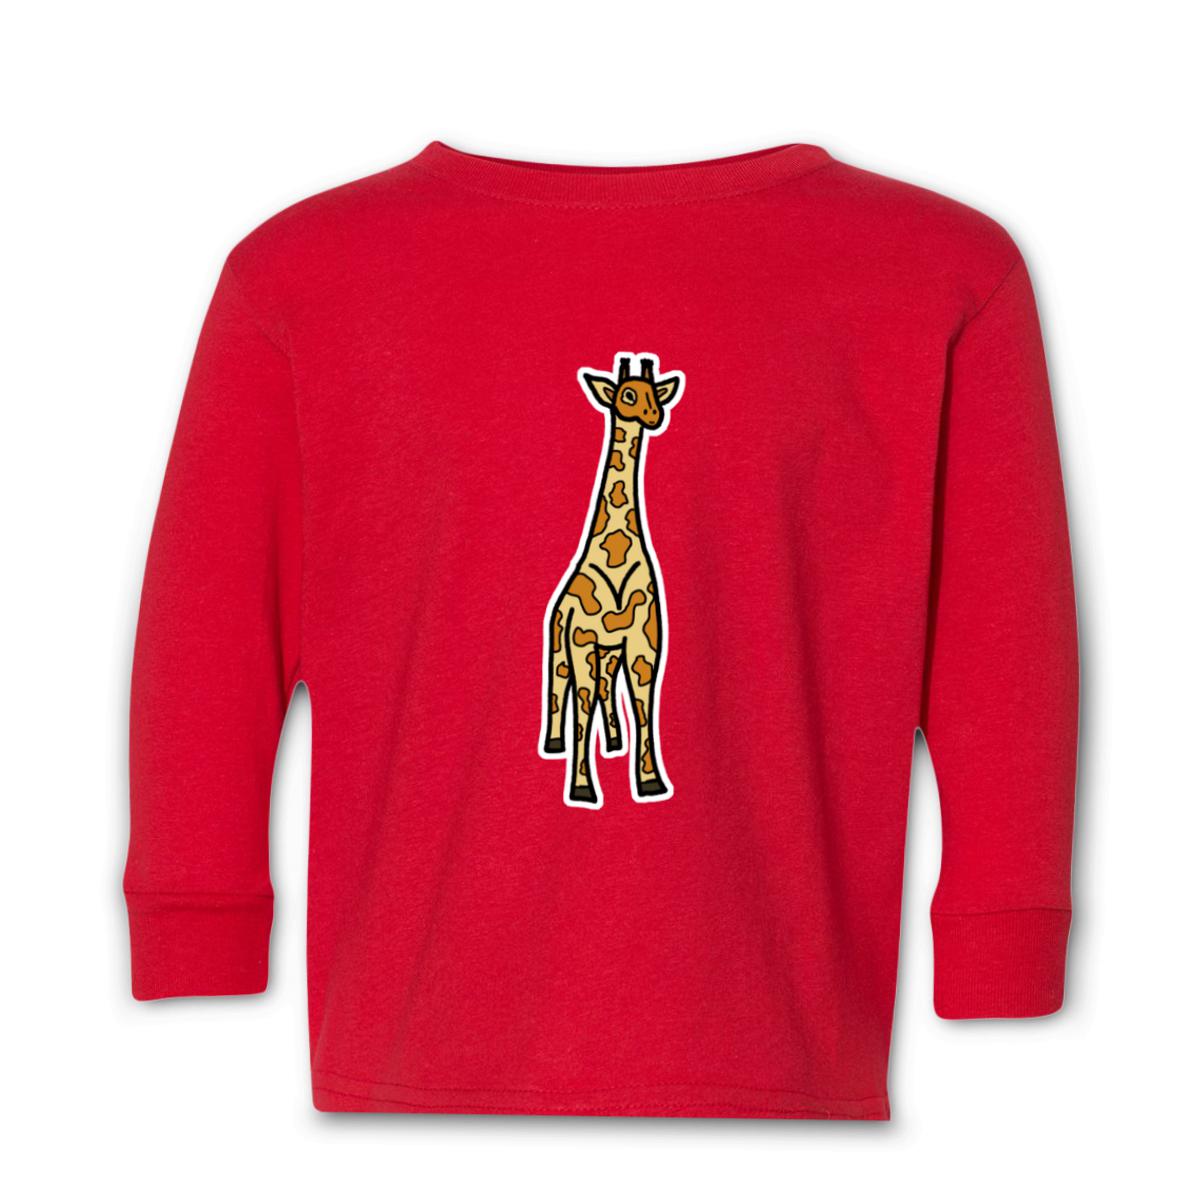 Toy Giraffe Toddler Long Sleeve Tee 4T red